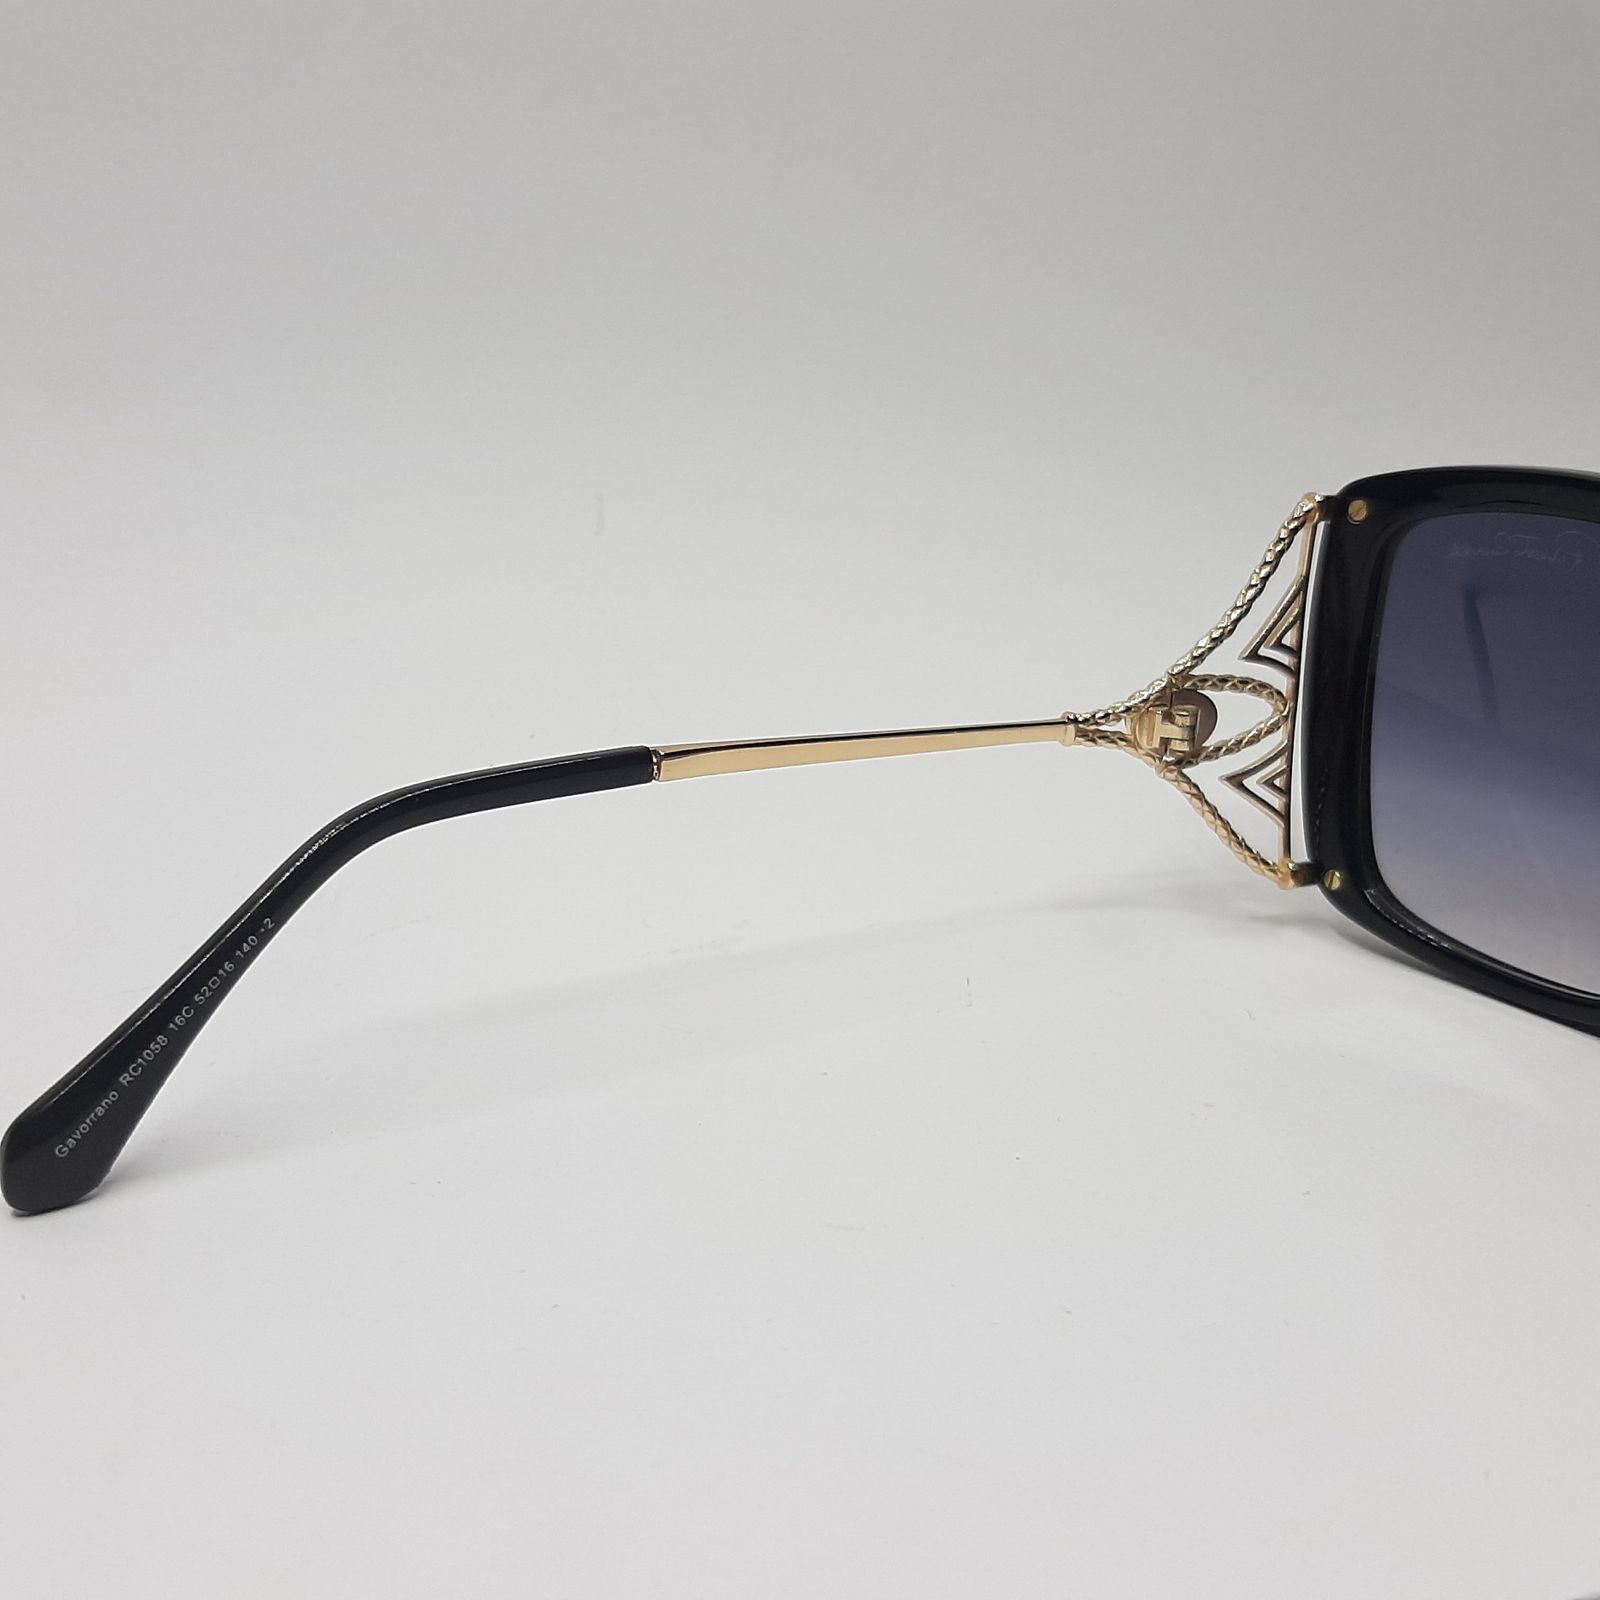 عینک آفتابی زنانه روبرتو کاوالی مدل RC105816c -  - 7